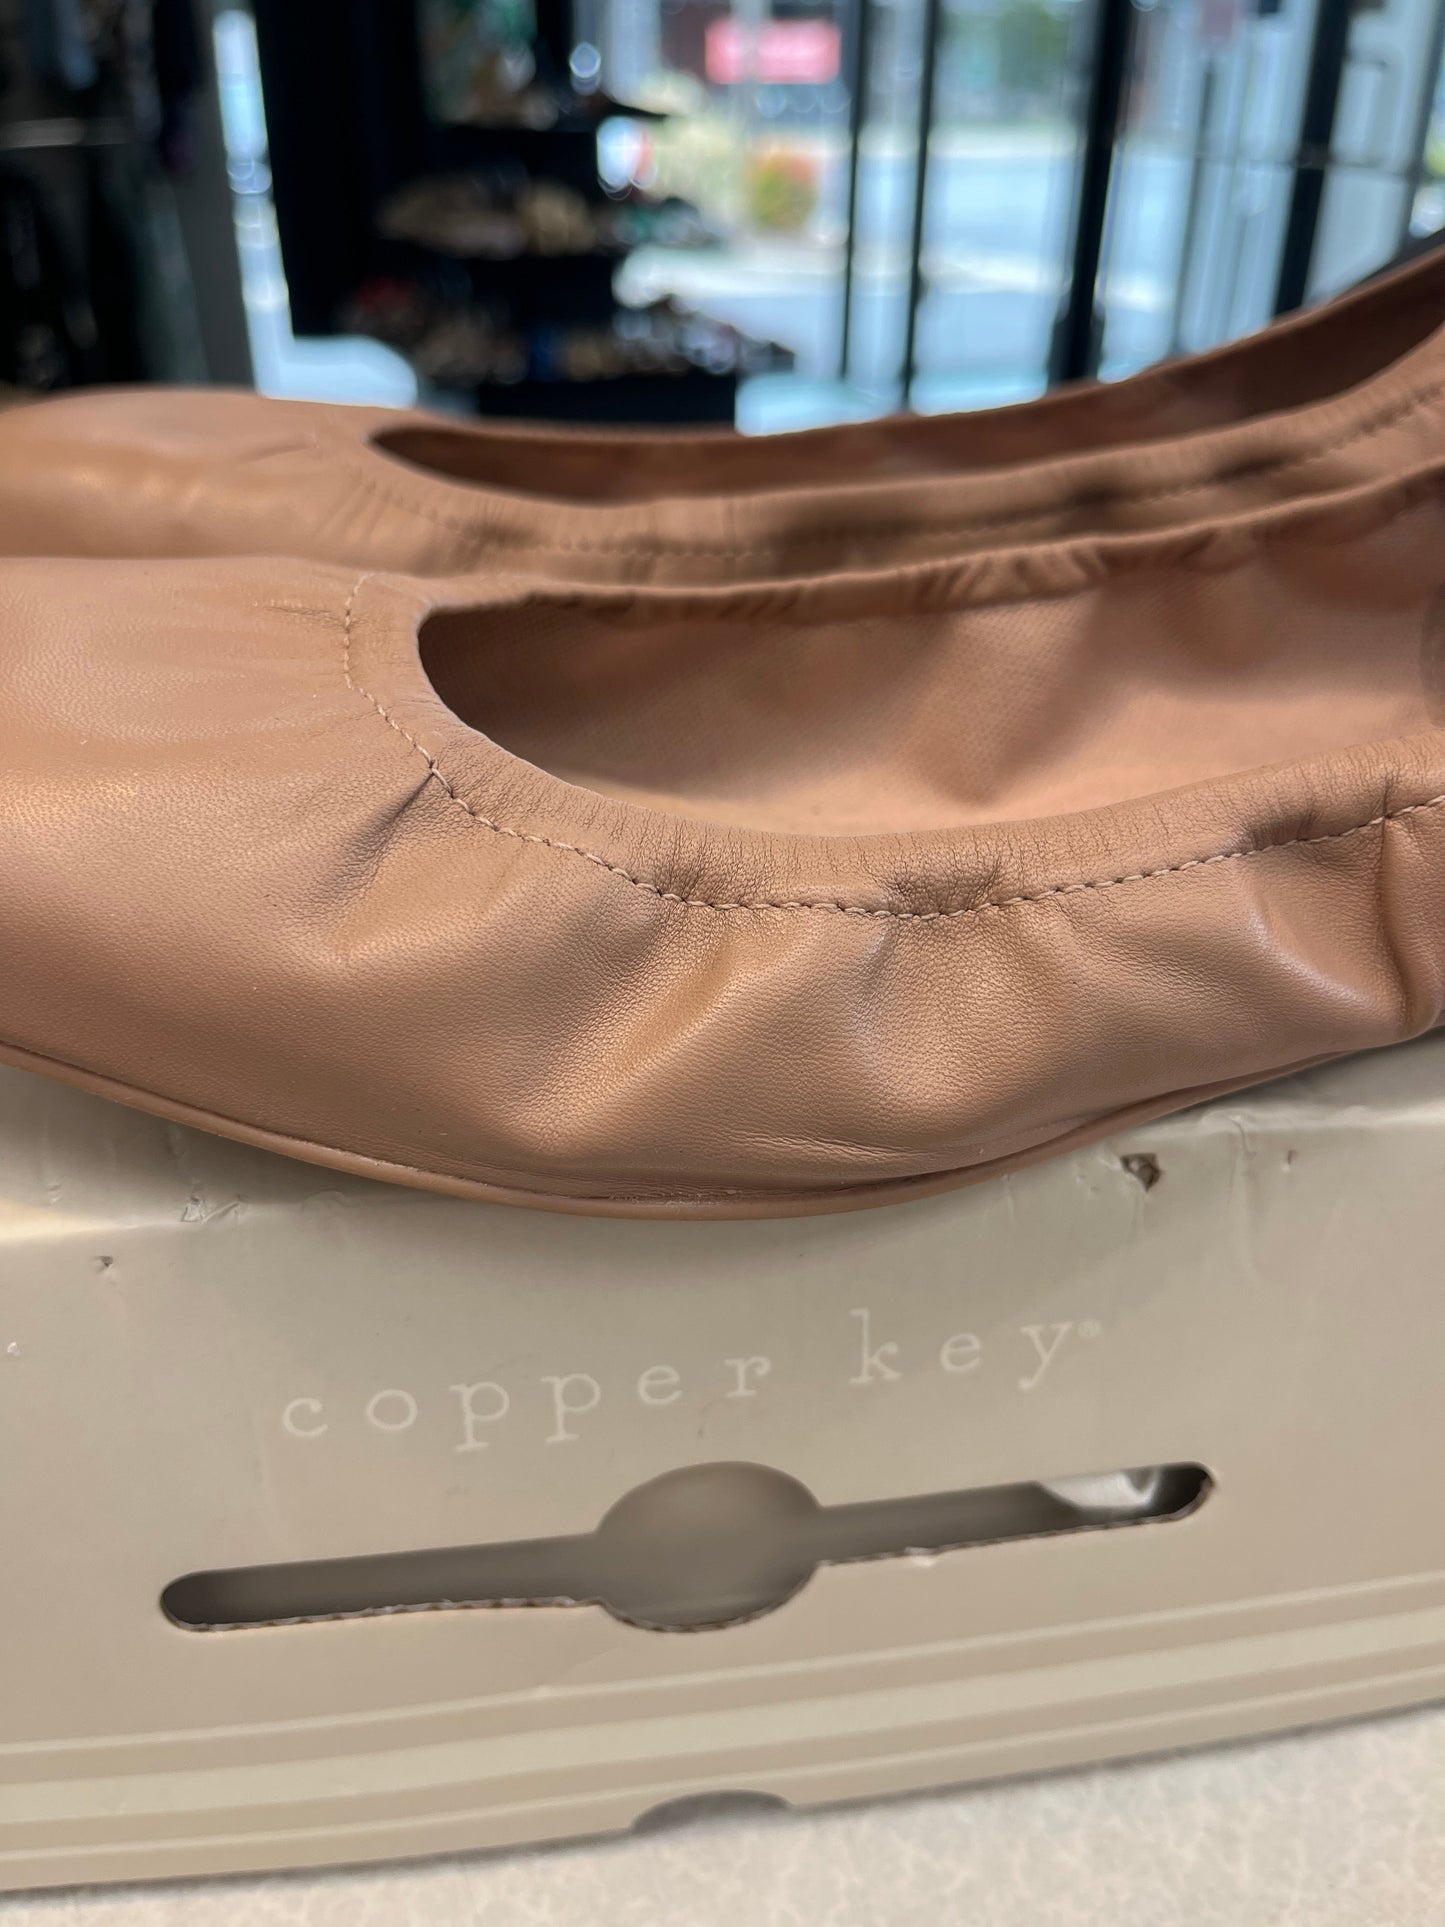 Shoes Flats Ballet By Copper Key  Size: 9.5